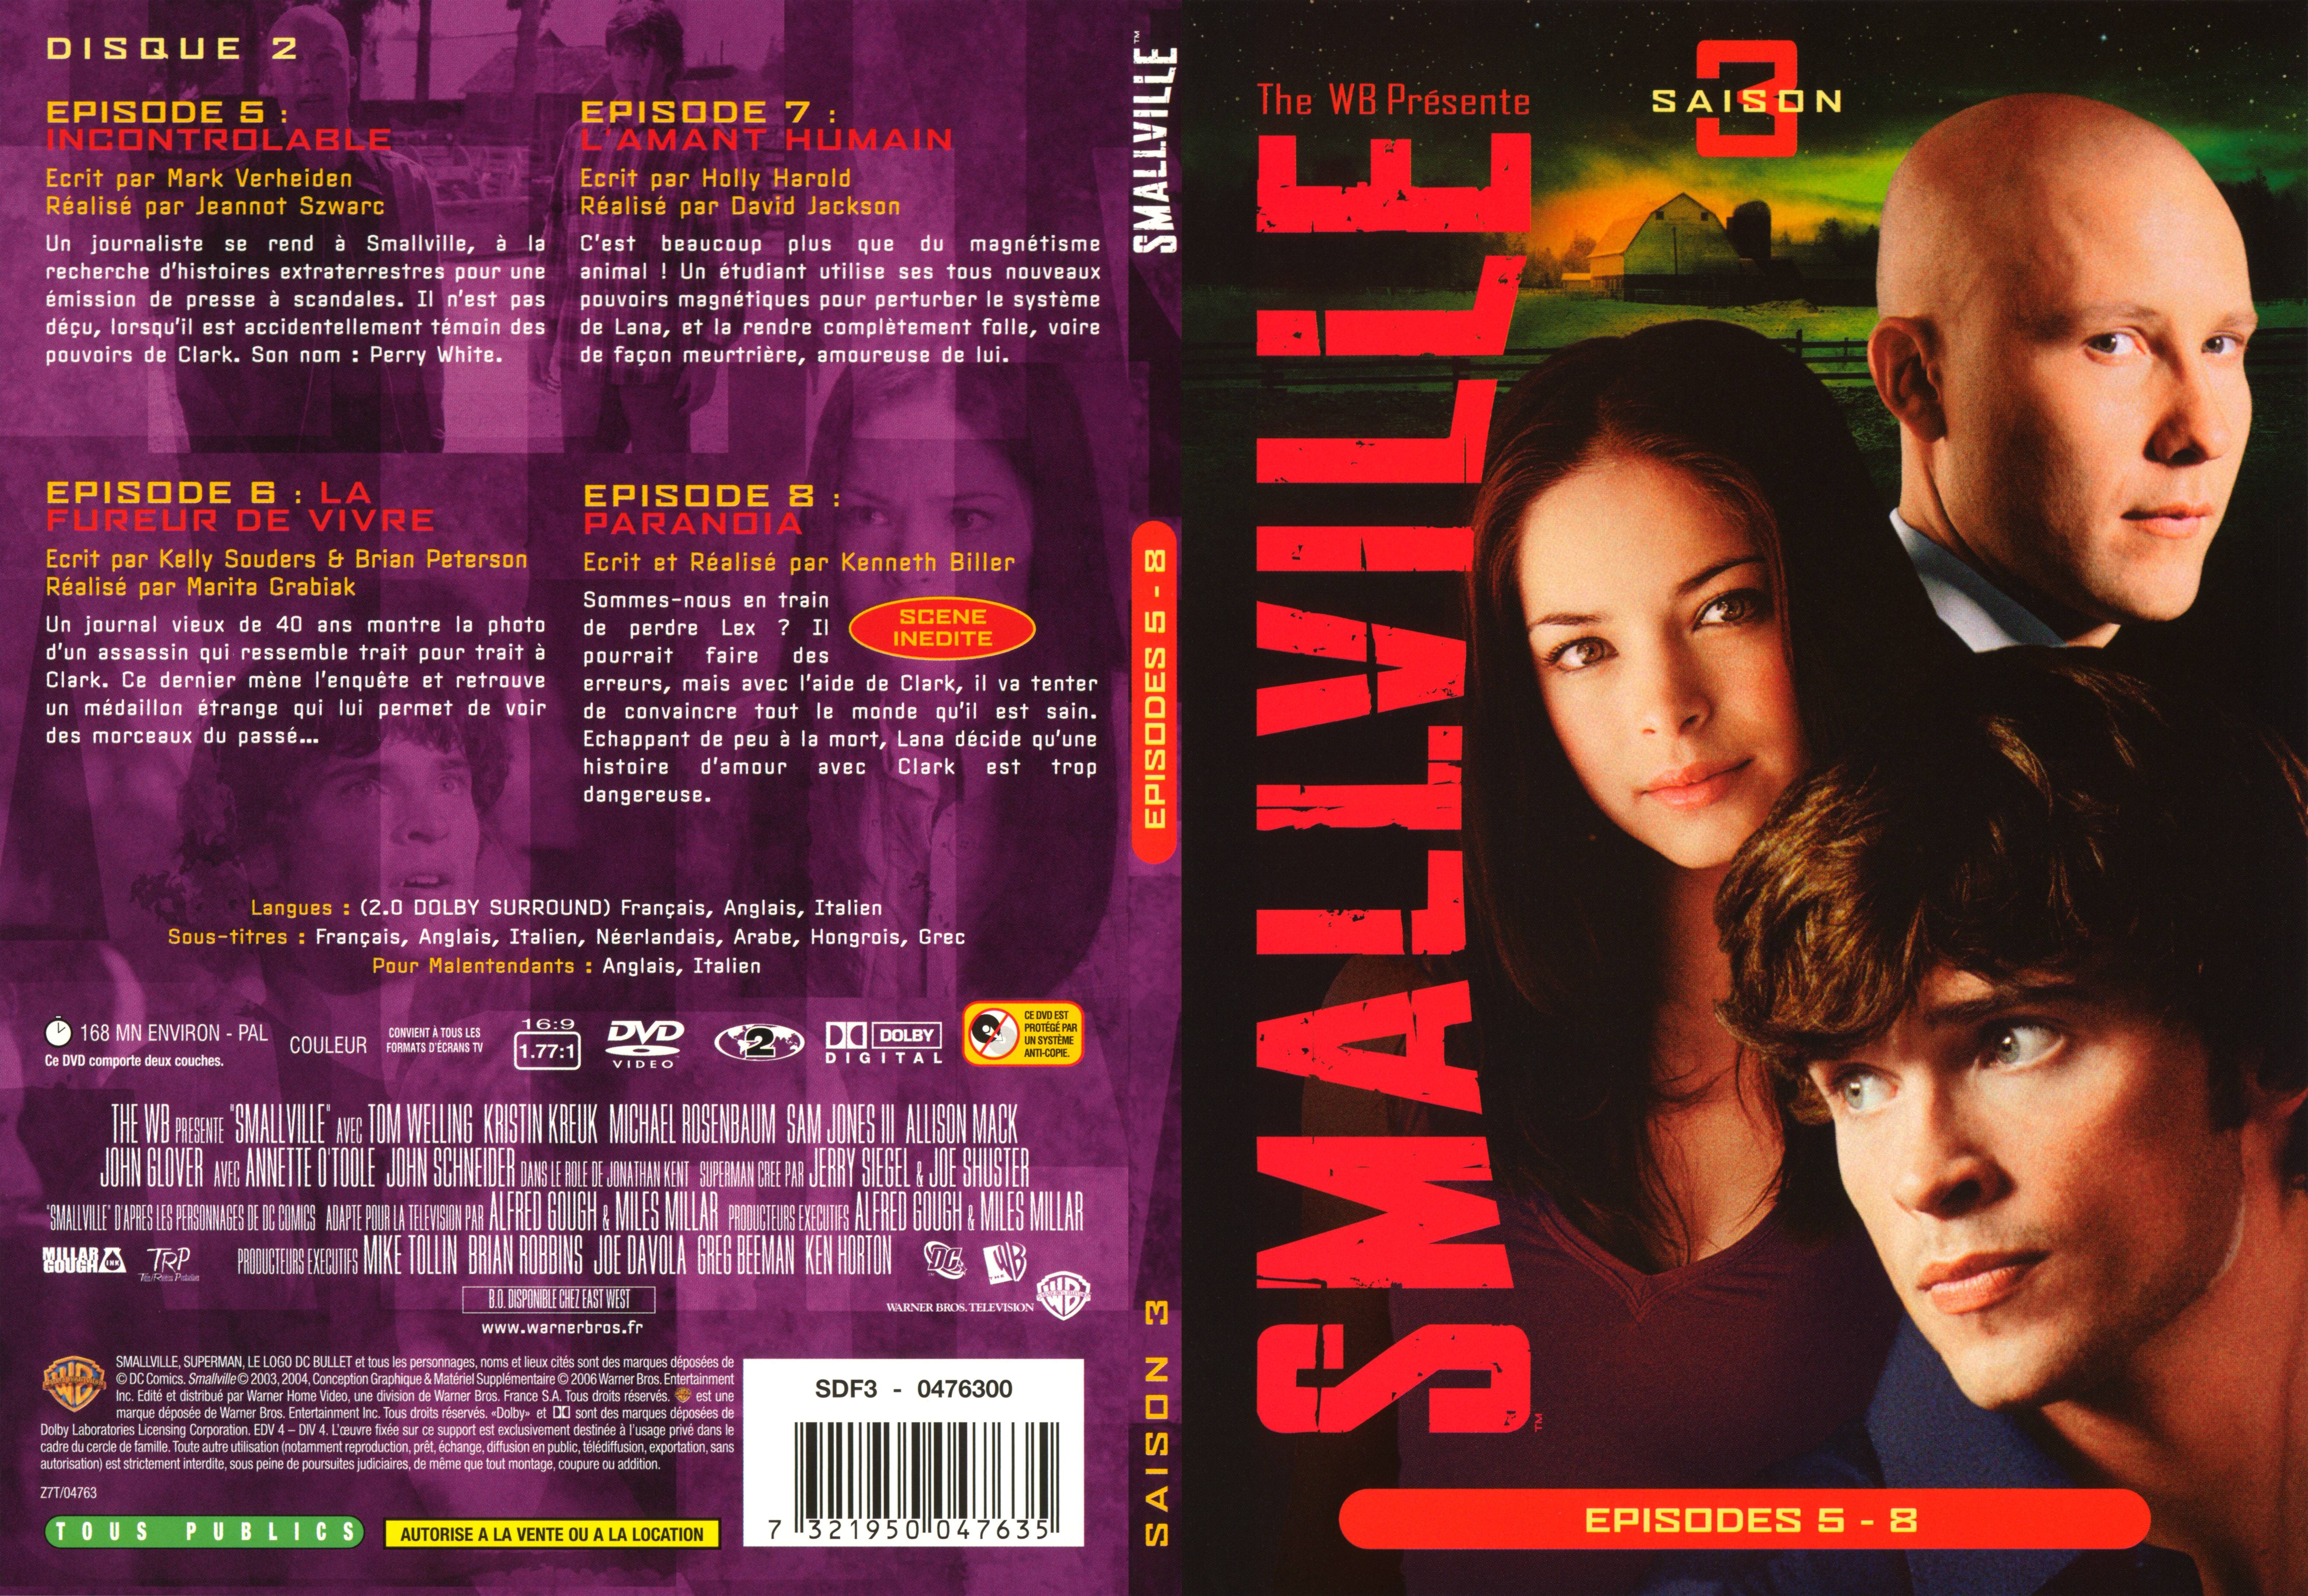 Jaquette DVD Smallville saison 3 DVD 2